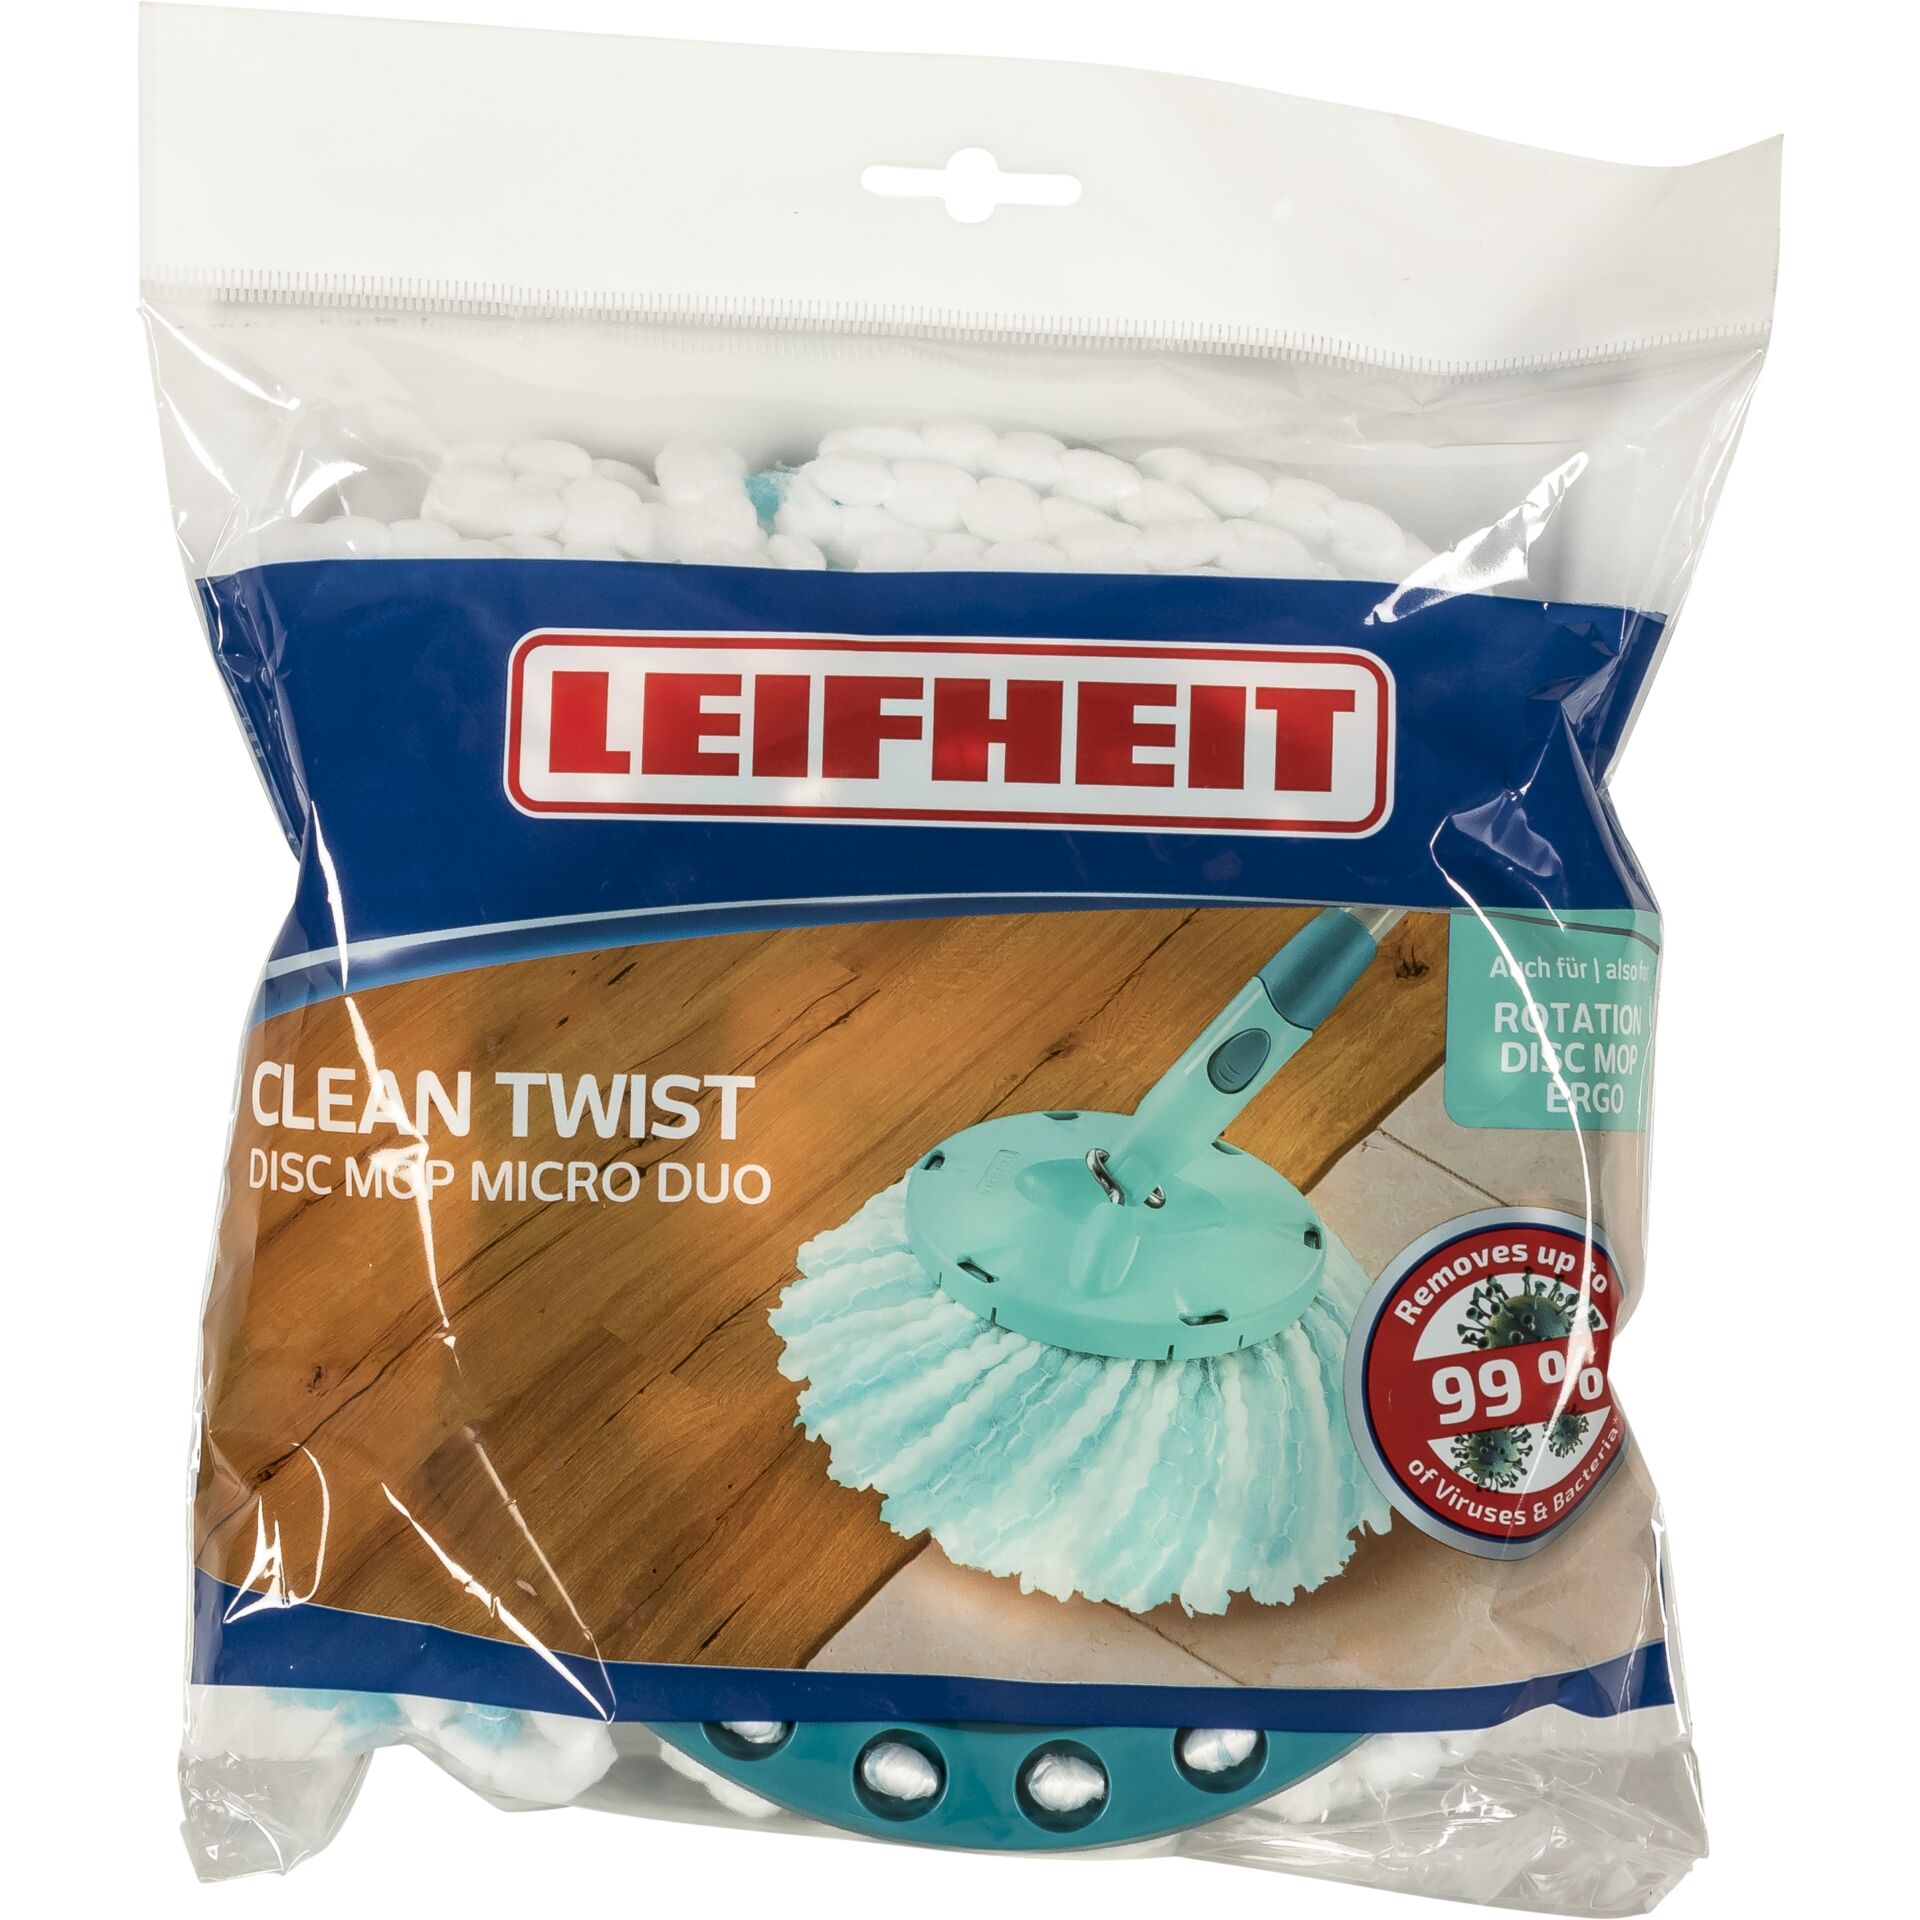 Leifheit CLEAN TWIST Disc Mop